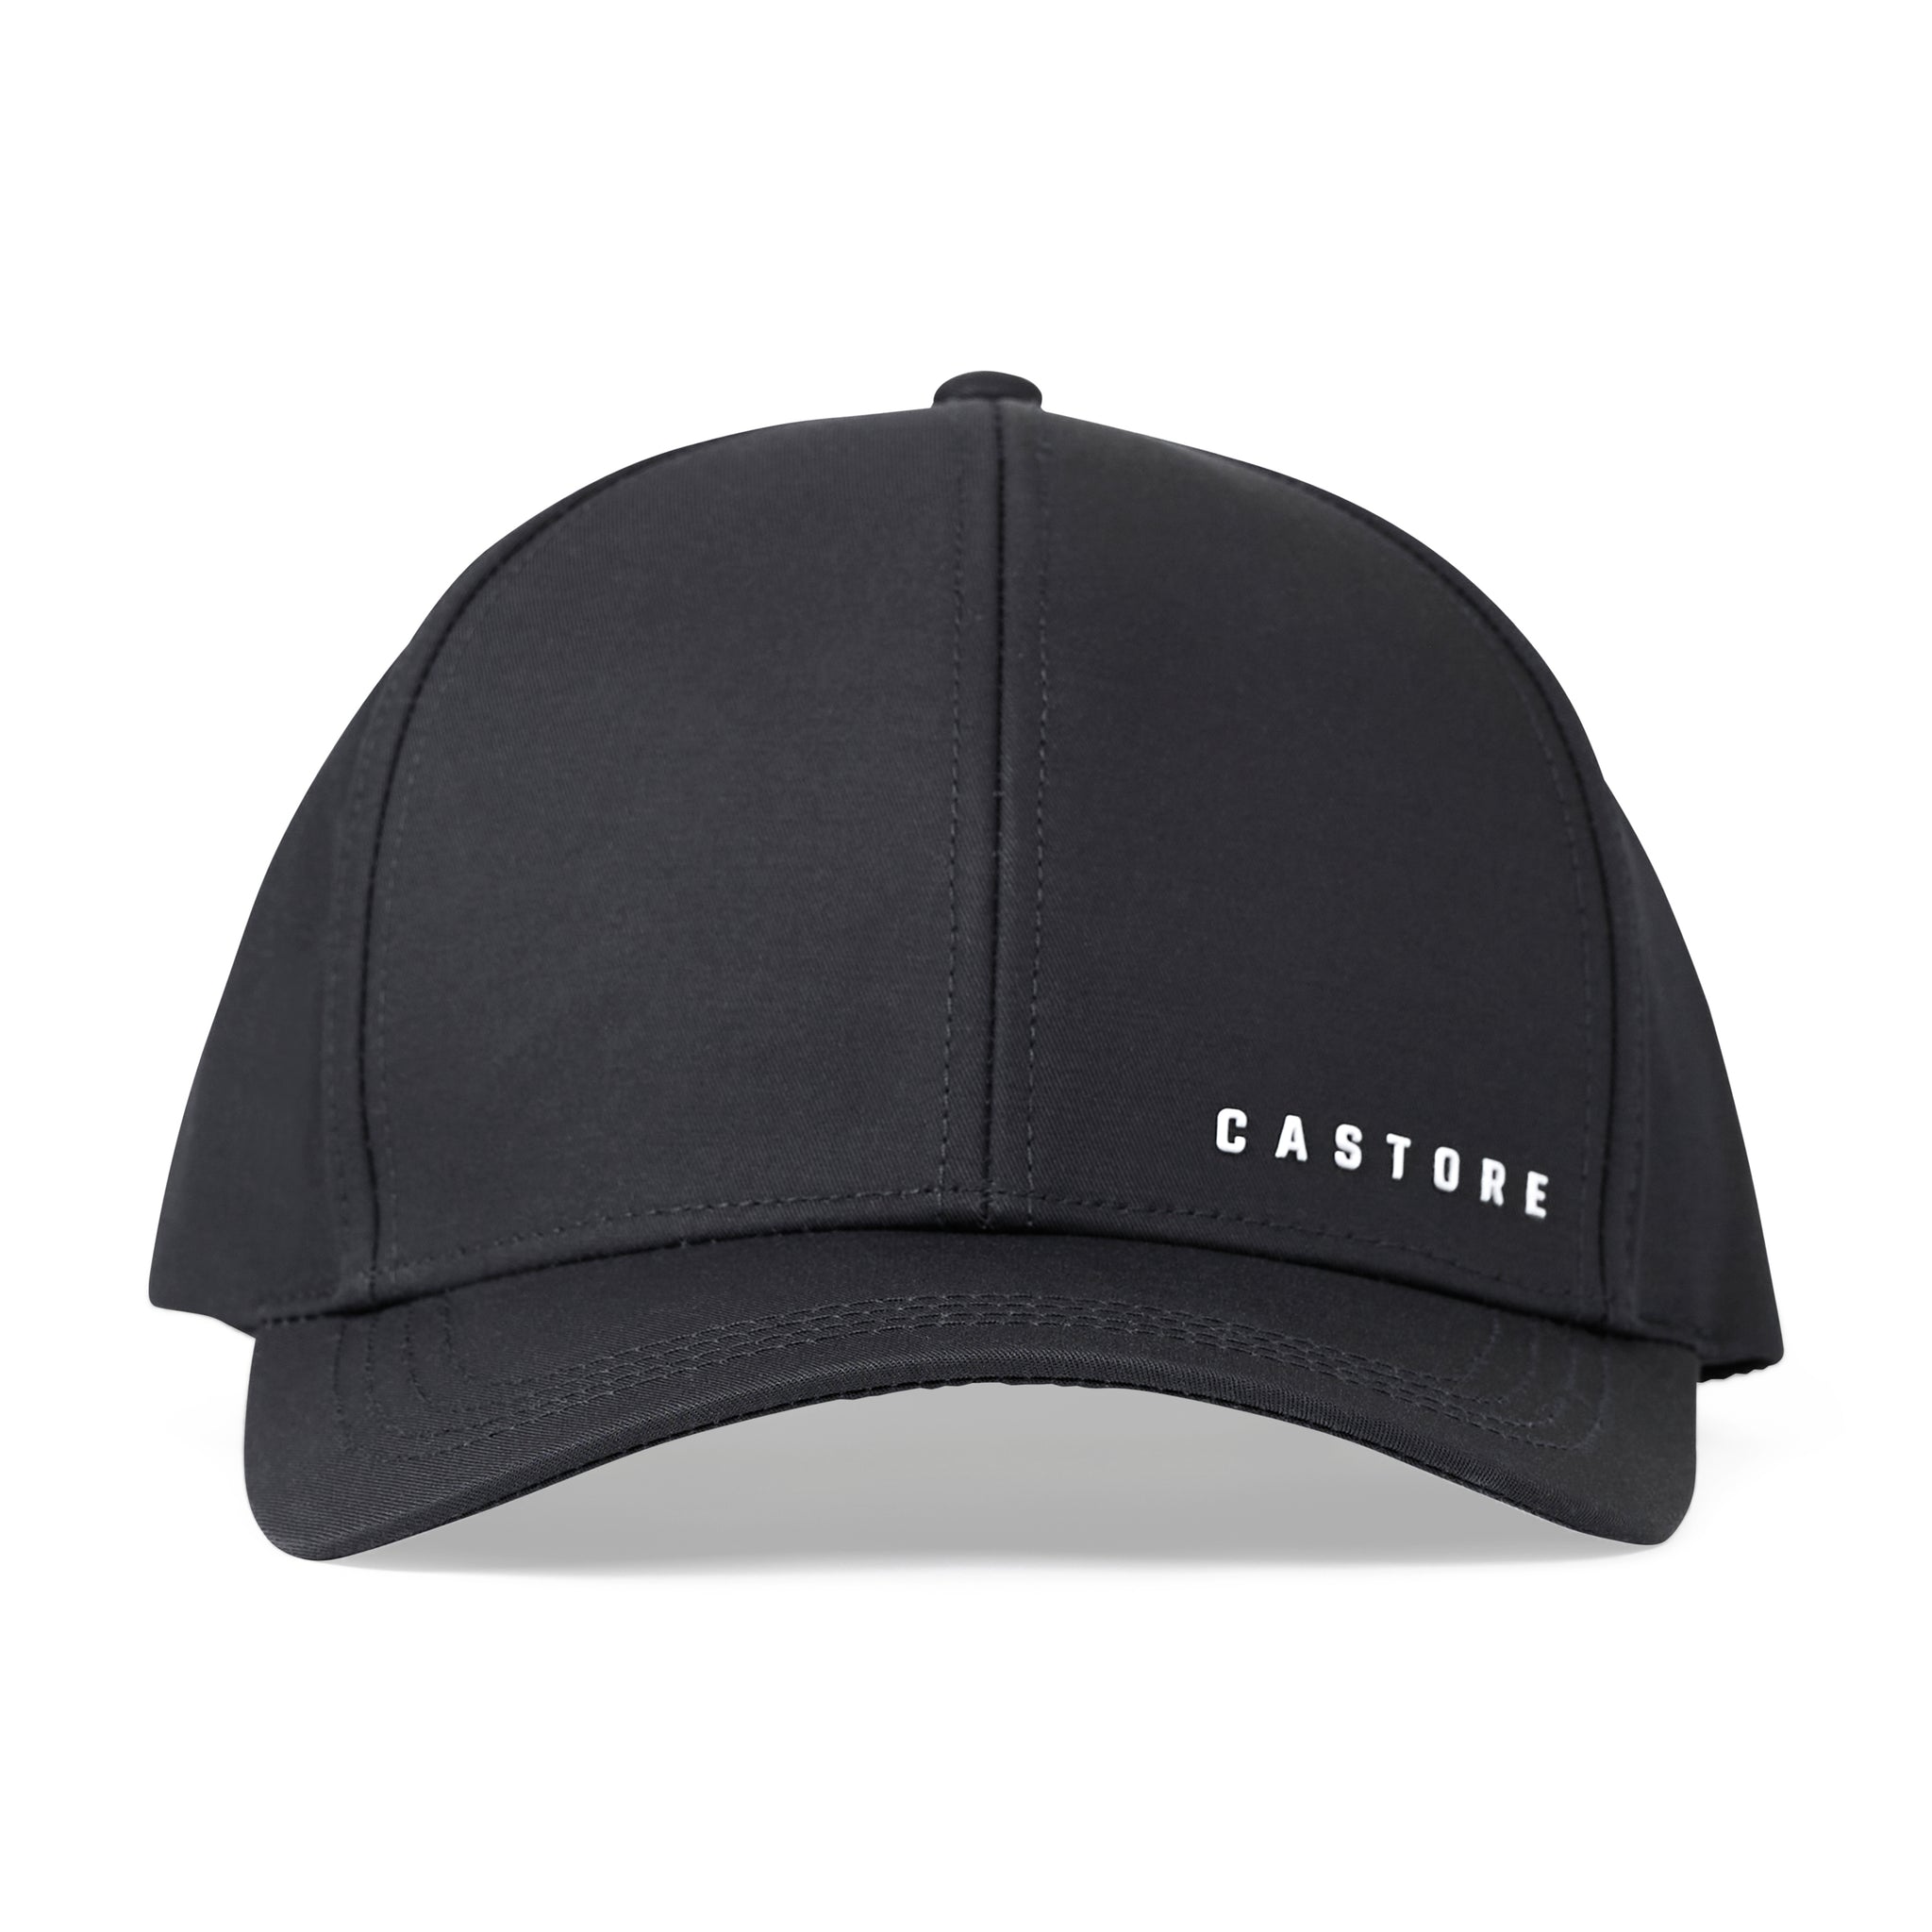 castore-graphic-golf-cap-cu0911-onyx